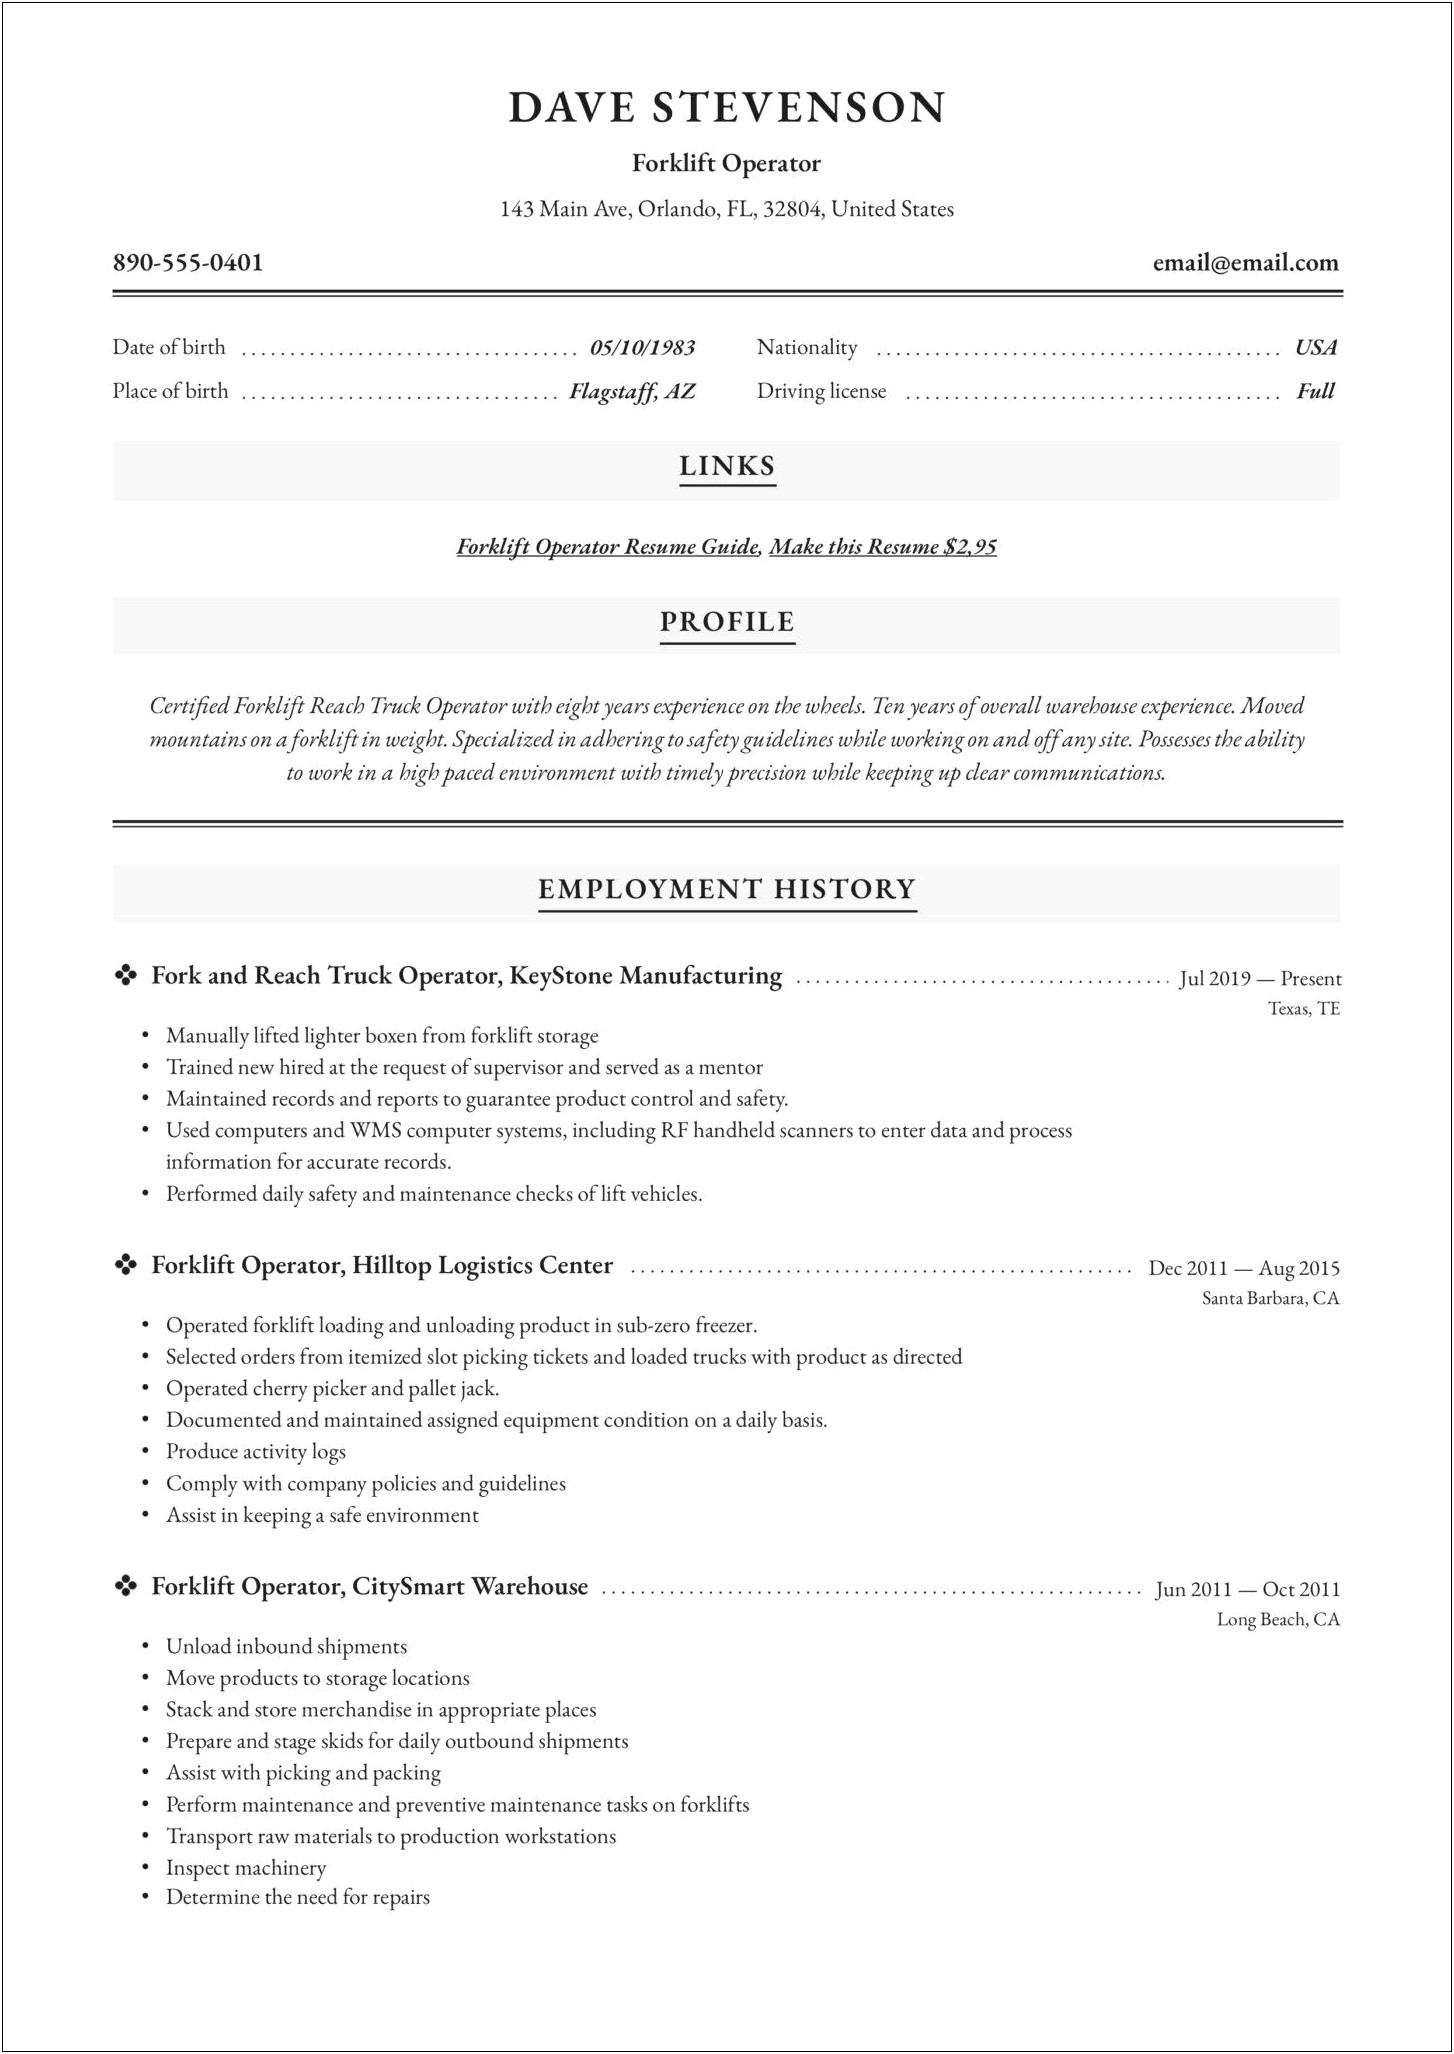 Resume Job Description For Forklift Operator